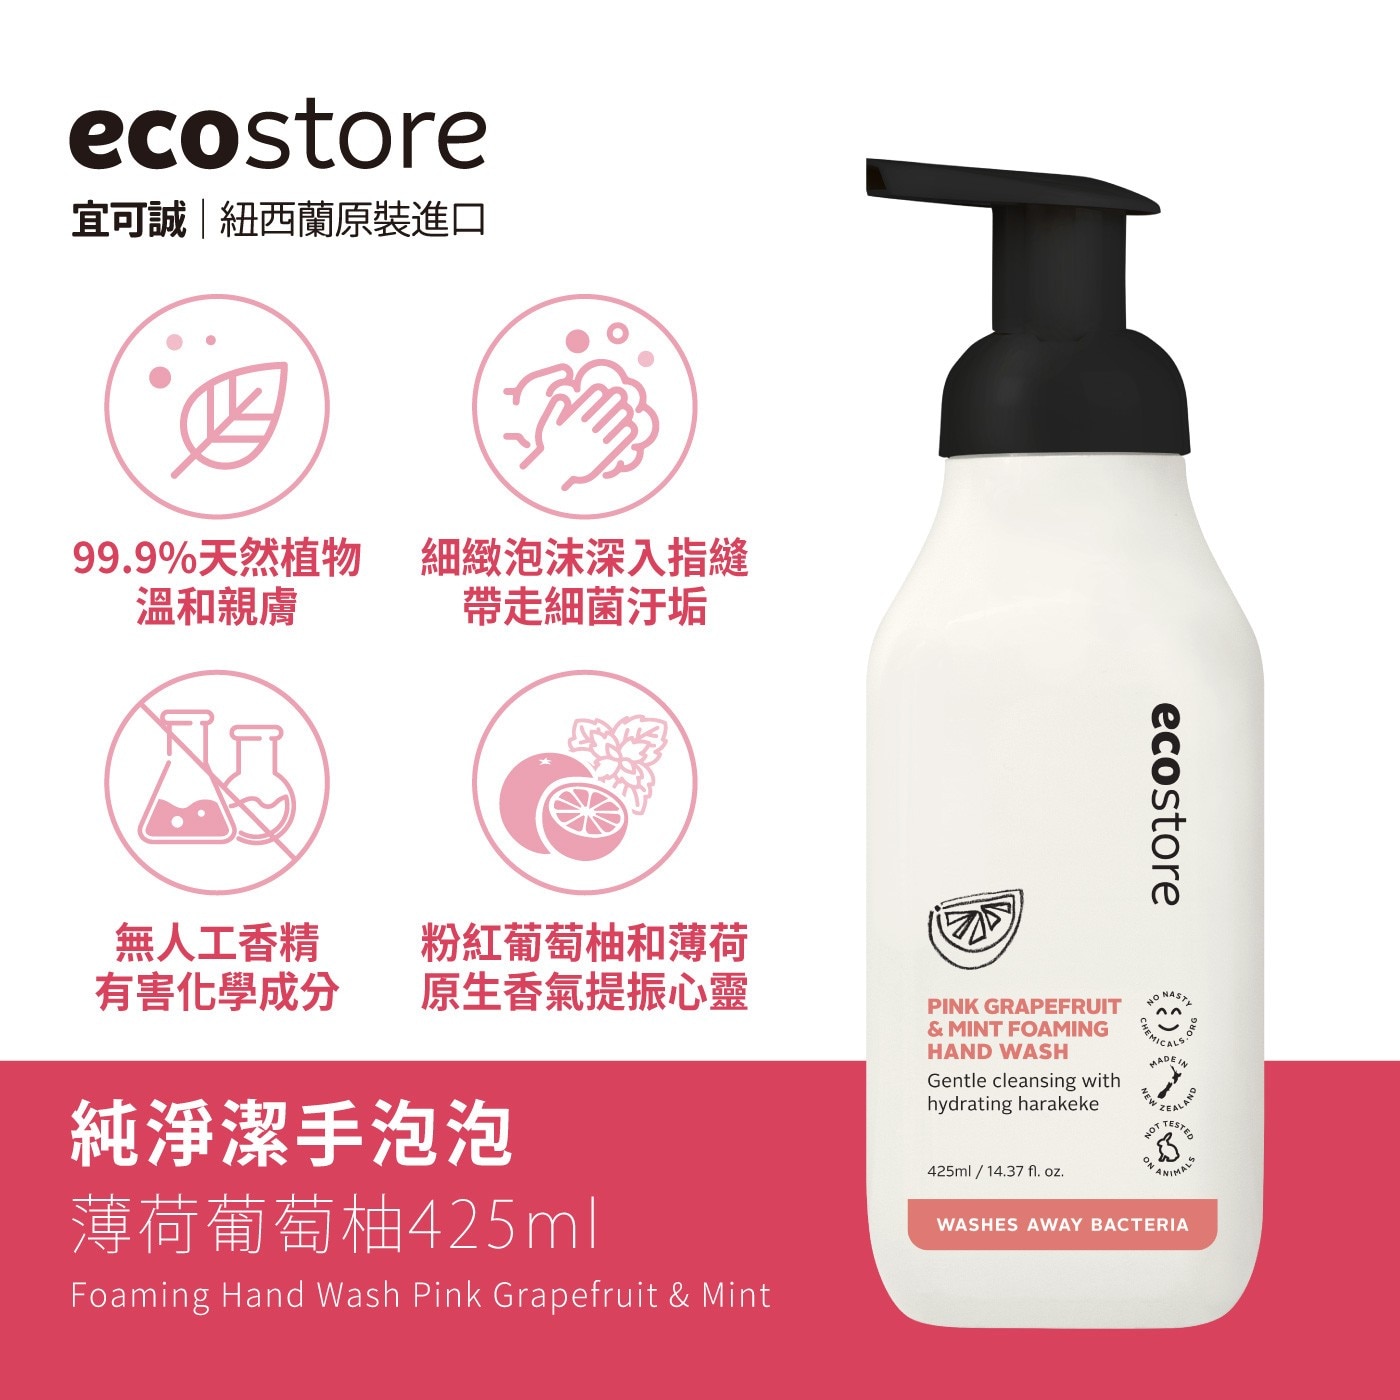 ecostore 純淨潔手泡泡 薄荷葡萄柚 425毫升 X 3入99.9%天然植物溫和親膚細緻泡沫深入指縫帶走細菌汙垢無人工香精有害化學成分